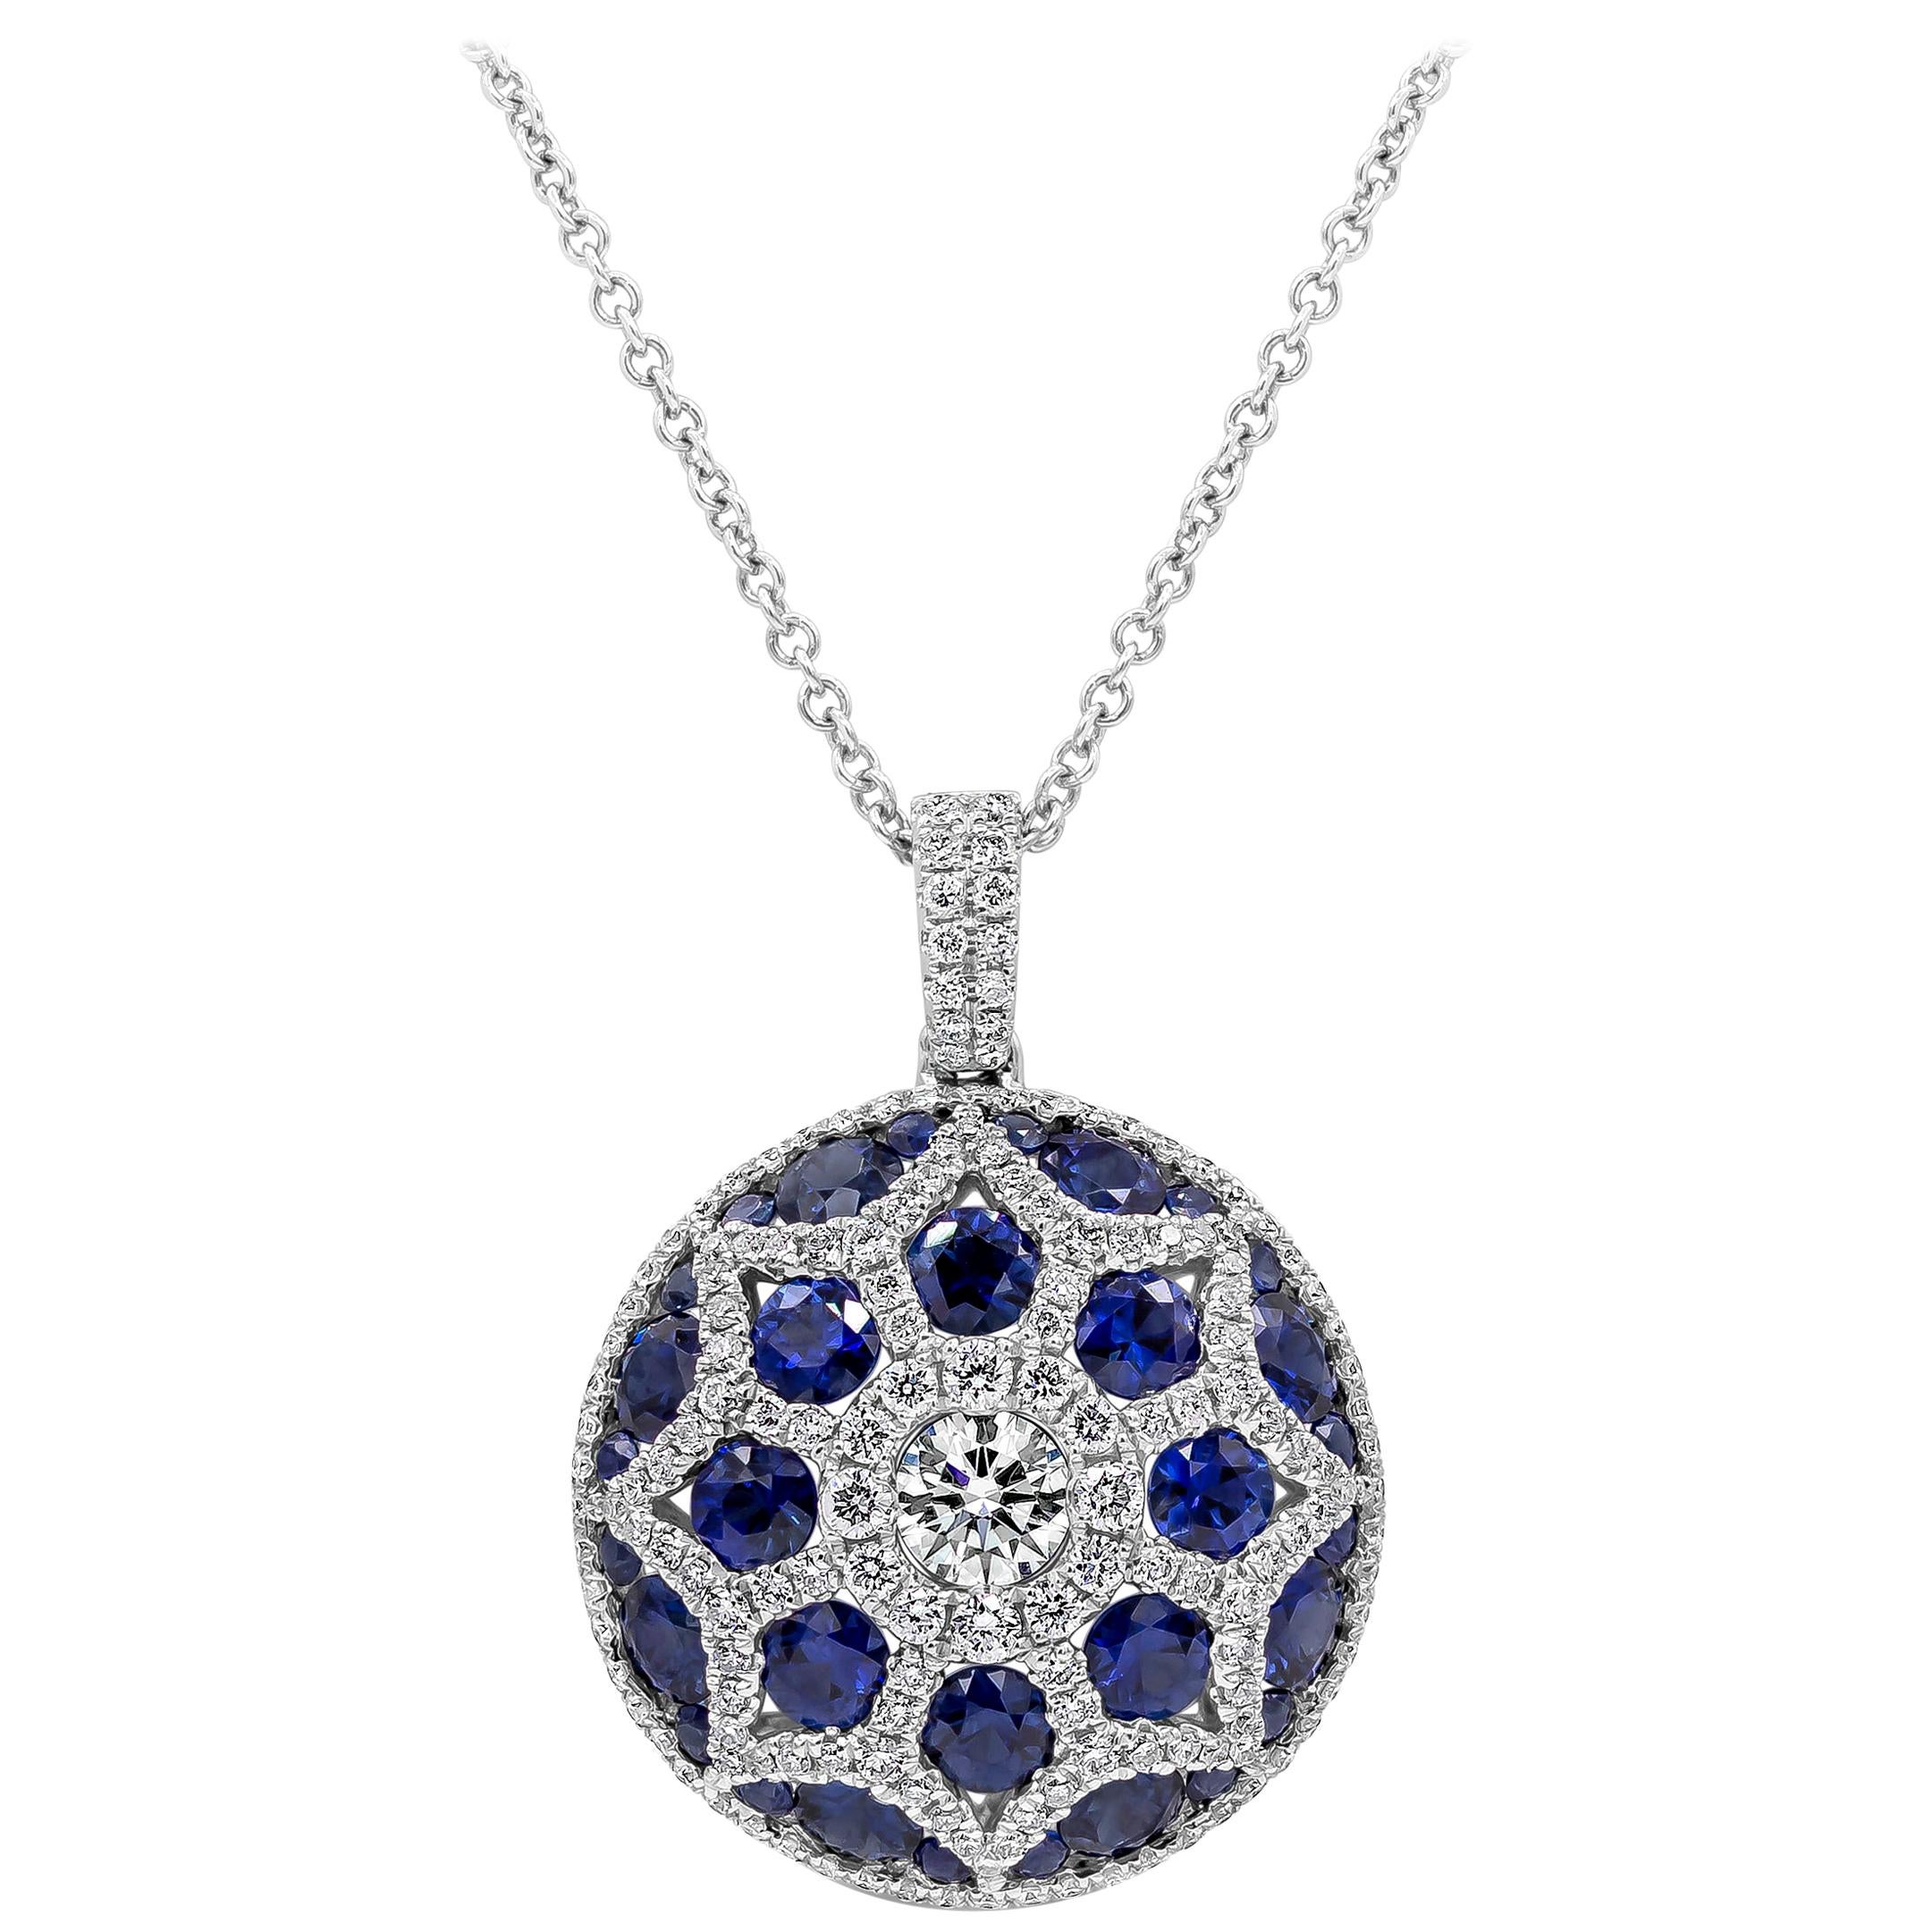 3.55 Carats Total Brilliant Round Blue Sapphire & Diamond Convex Circle Pendant